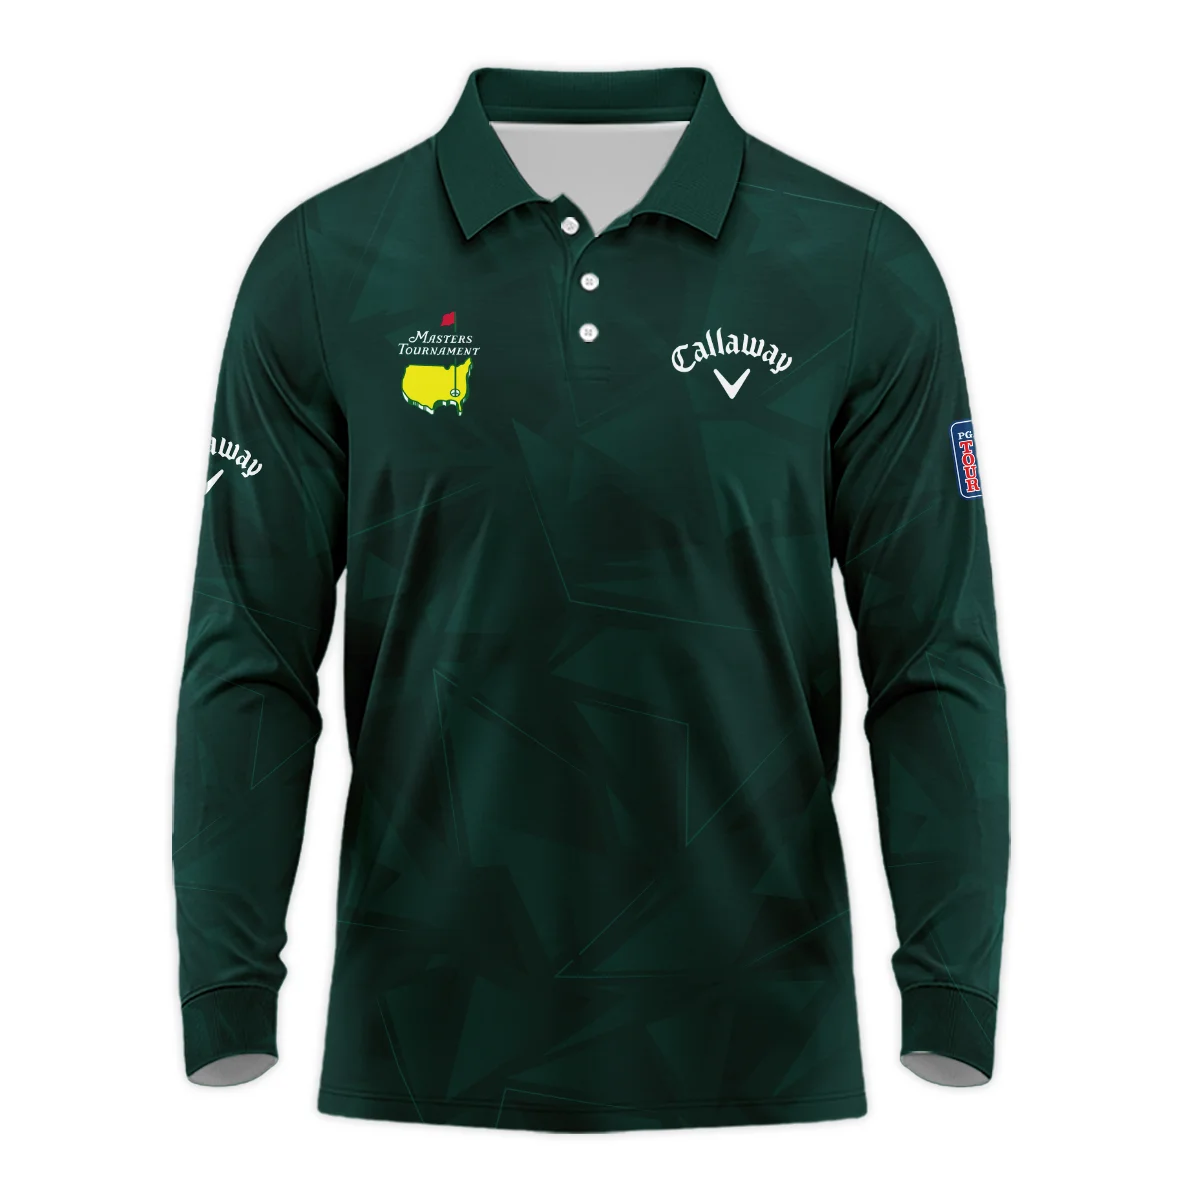 Dark Green Abstract Sport Masters Tournament Callaway Unisex Sweatshirt Style Classic Sweatshirt